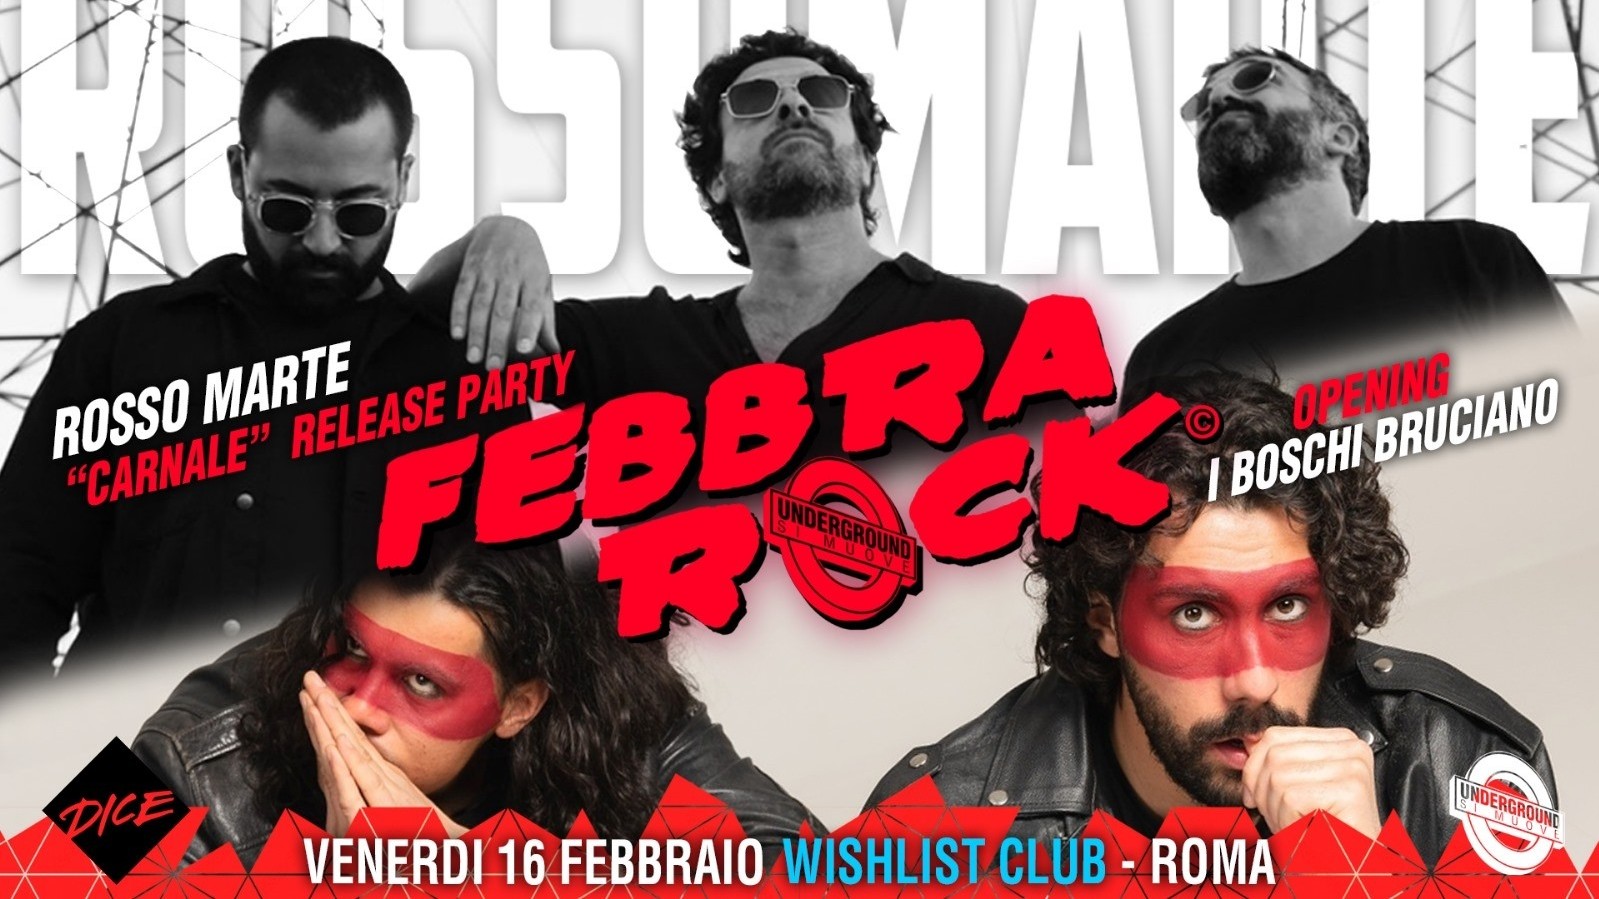 Febbra Rock - Rosso Marte "Carnale Release Party" / Opening I Boschi Bruciano